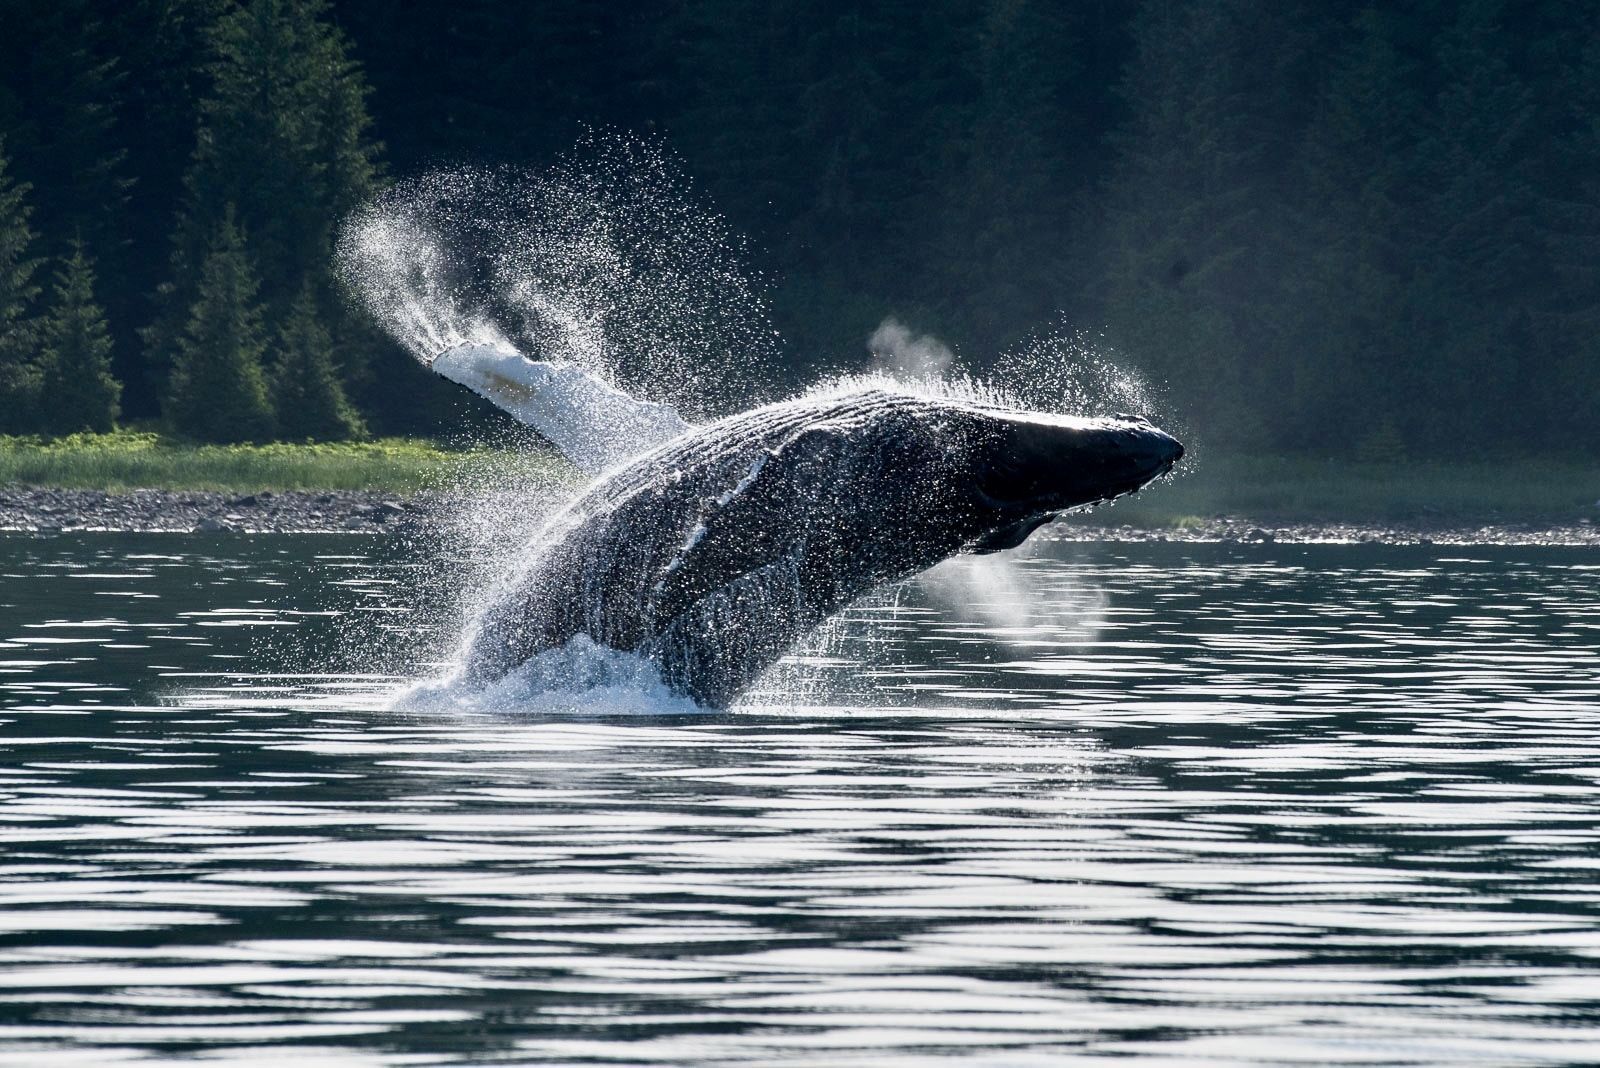 Best Whale Watching Spots In Alaska - Icy Strait Point